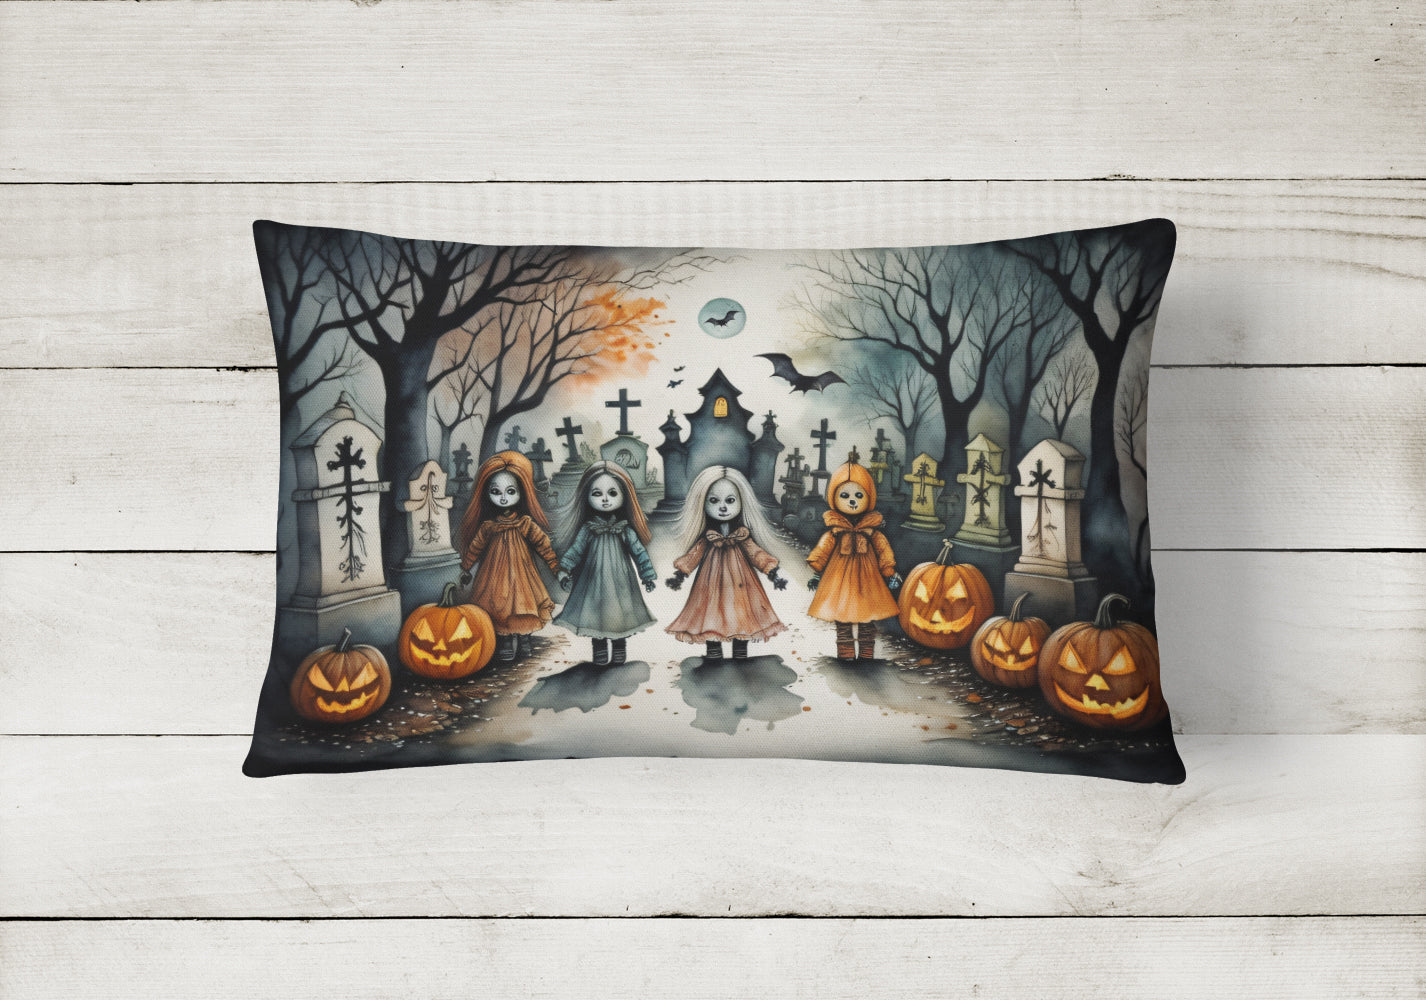 Buy this Creepy Dolls Spooky Halloween Fabric Decorative Pillow